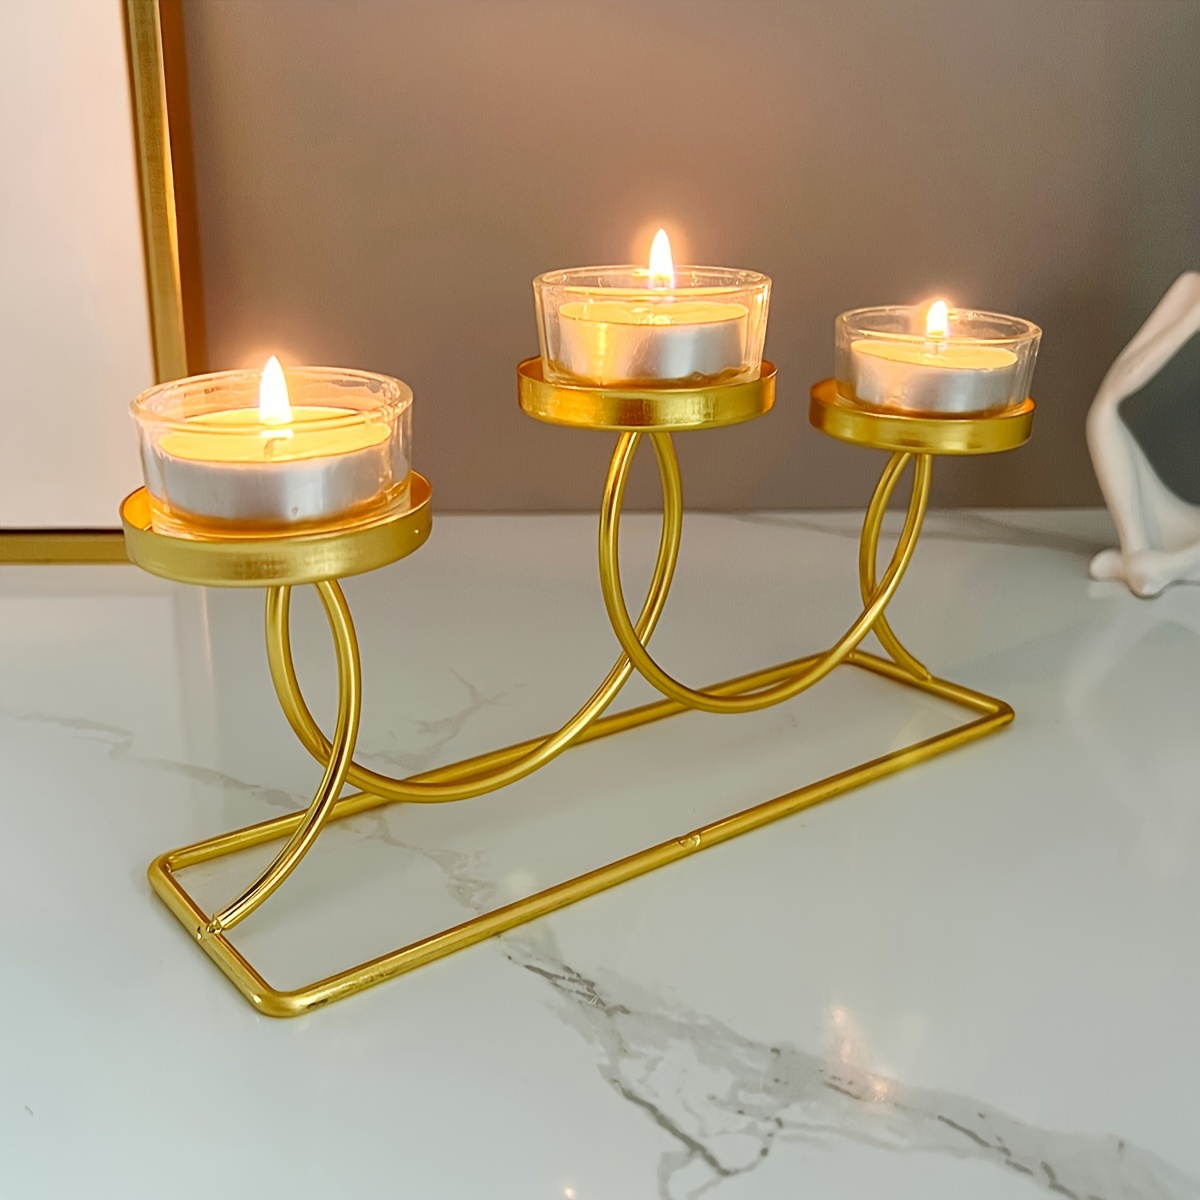 

Elegant Golden Multi-head Candle Holder - Iron Home Decor Accent Candle Holder Decor Wall Candle Holders Decor Set